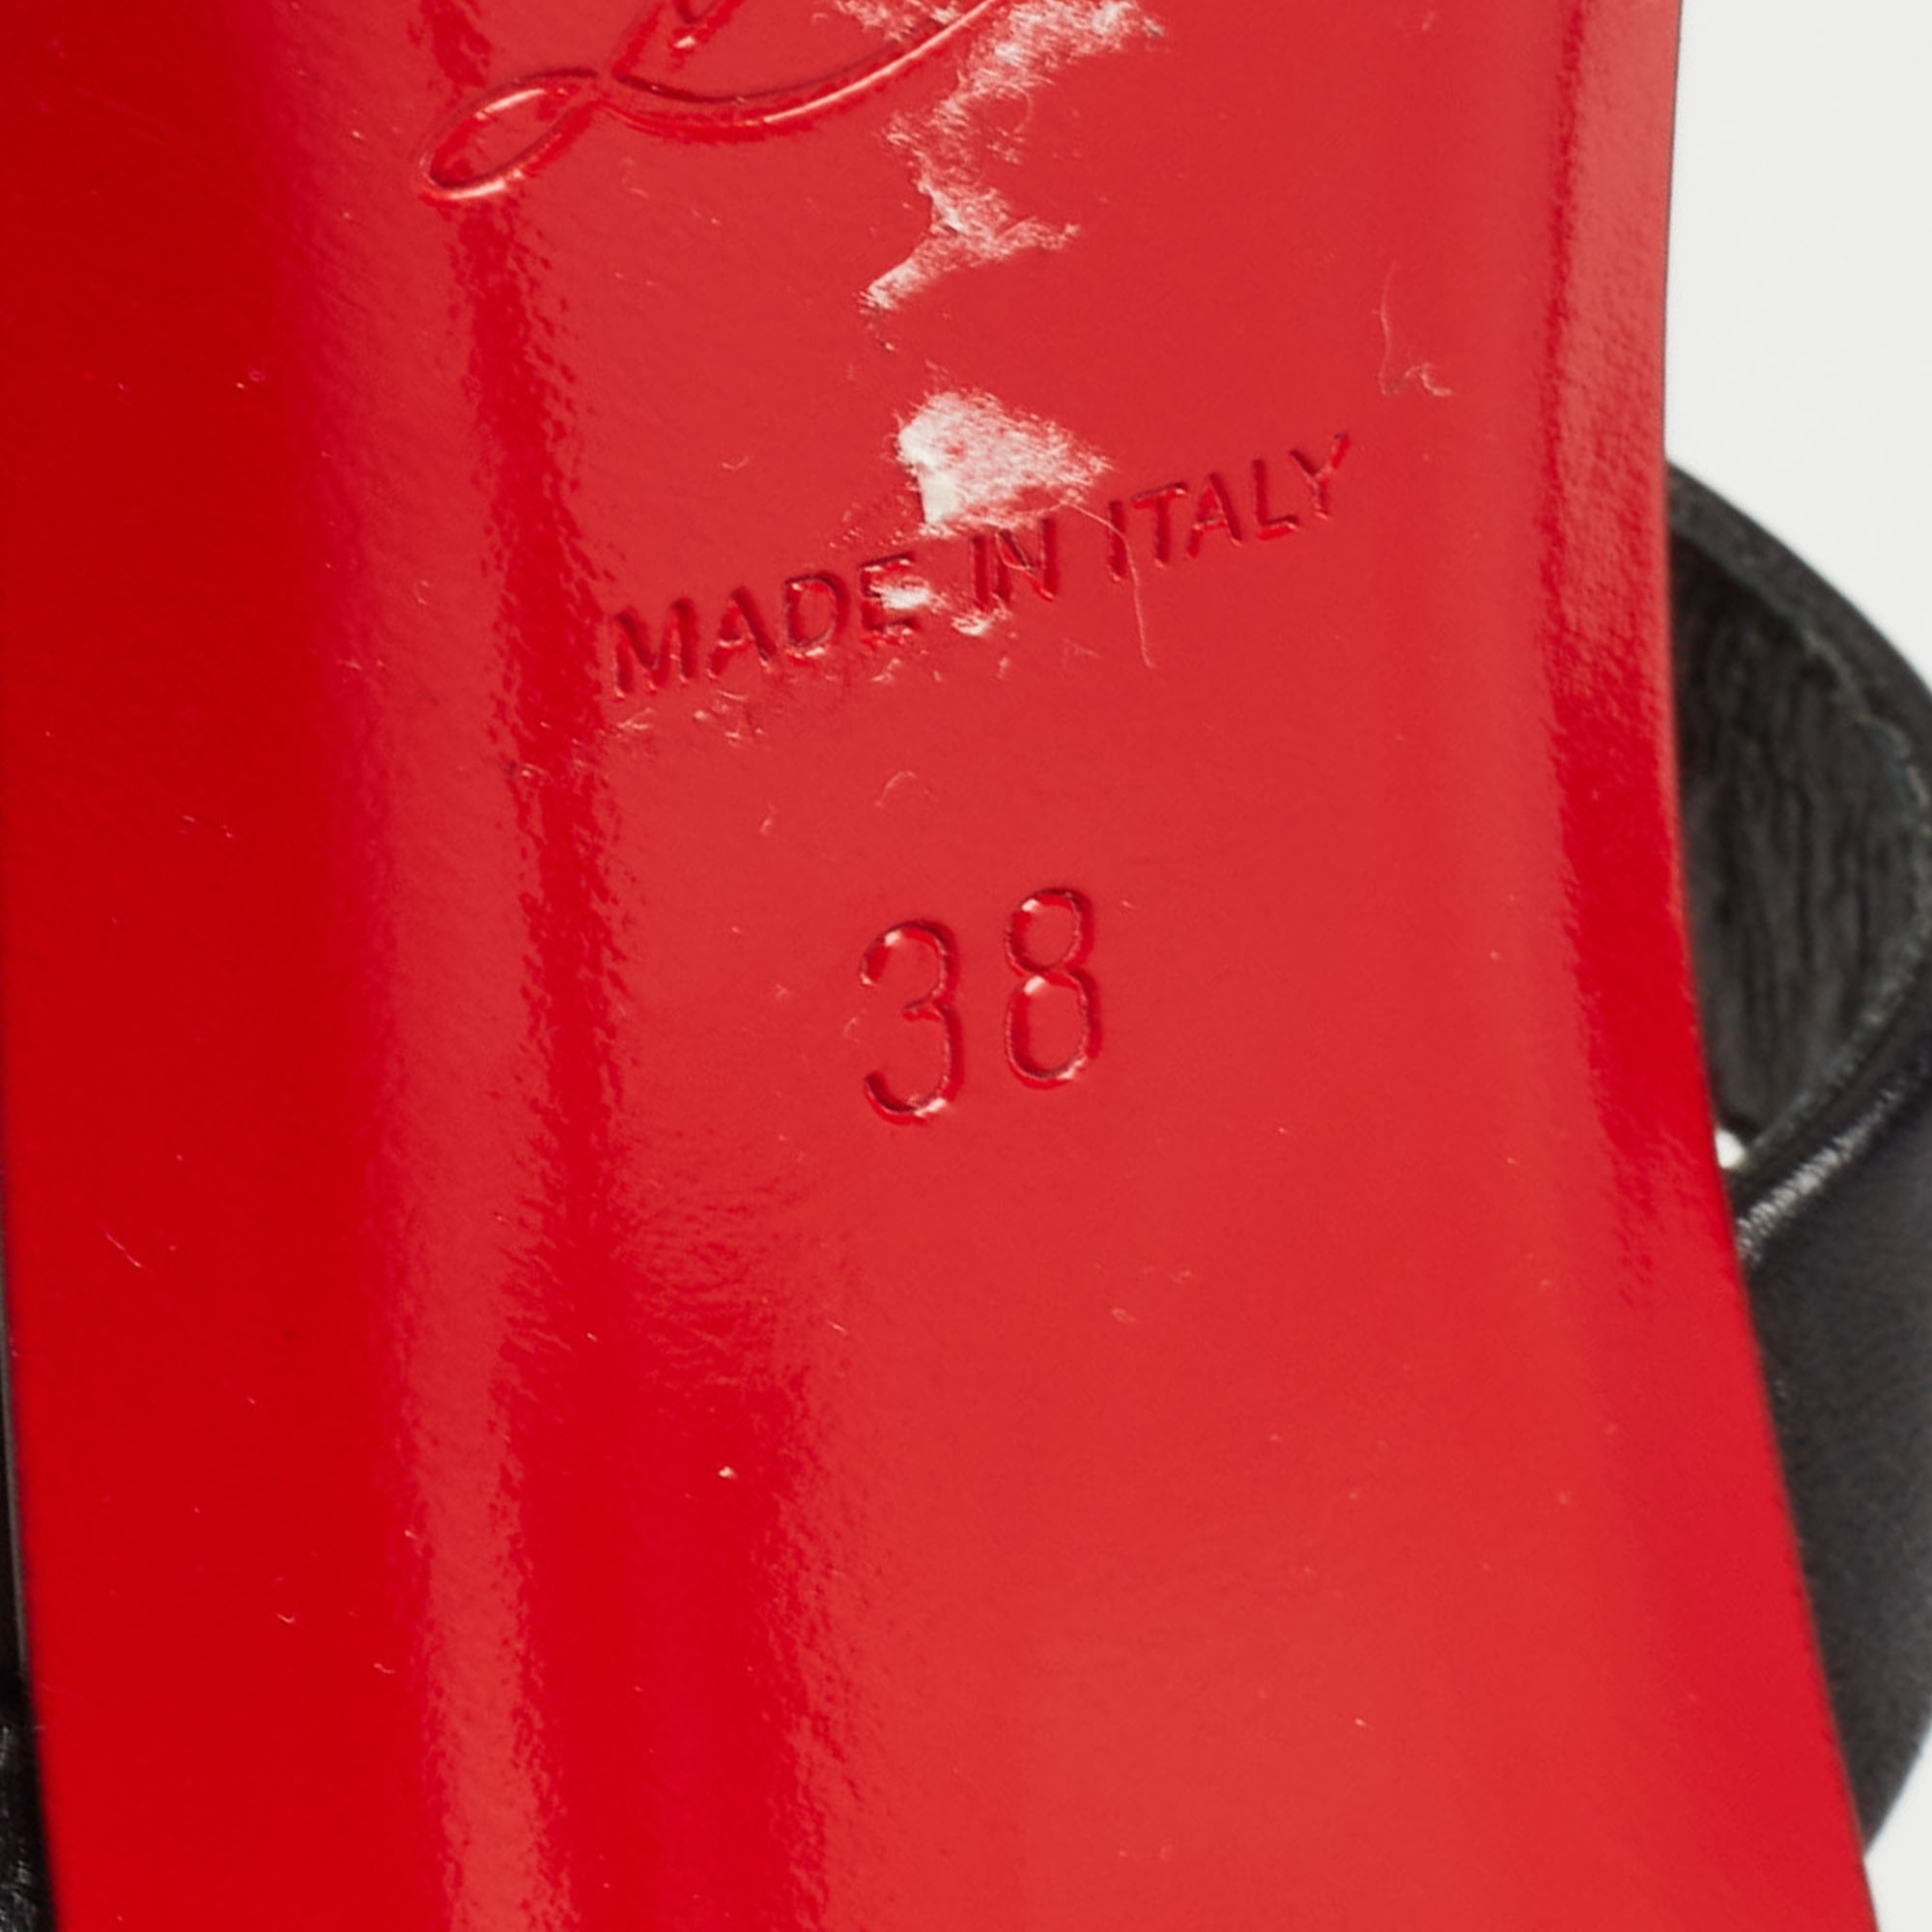 Christian Louboutin Black Leather Mule Sandals Size 38